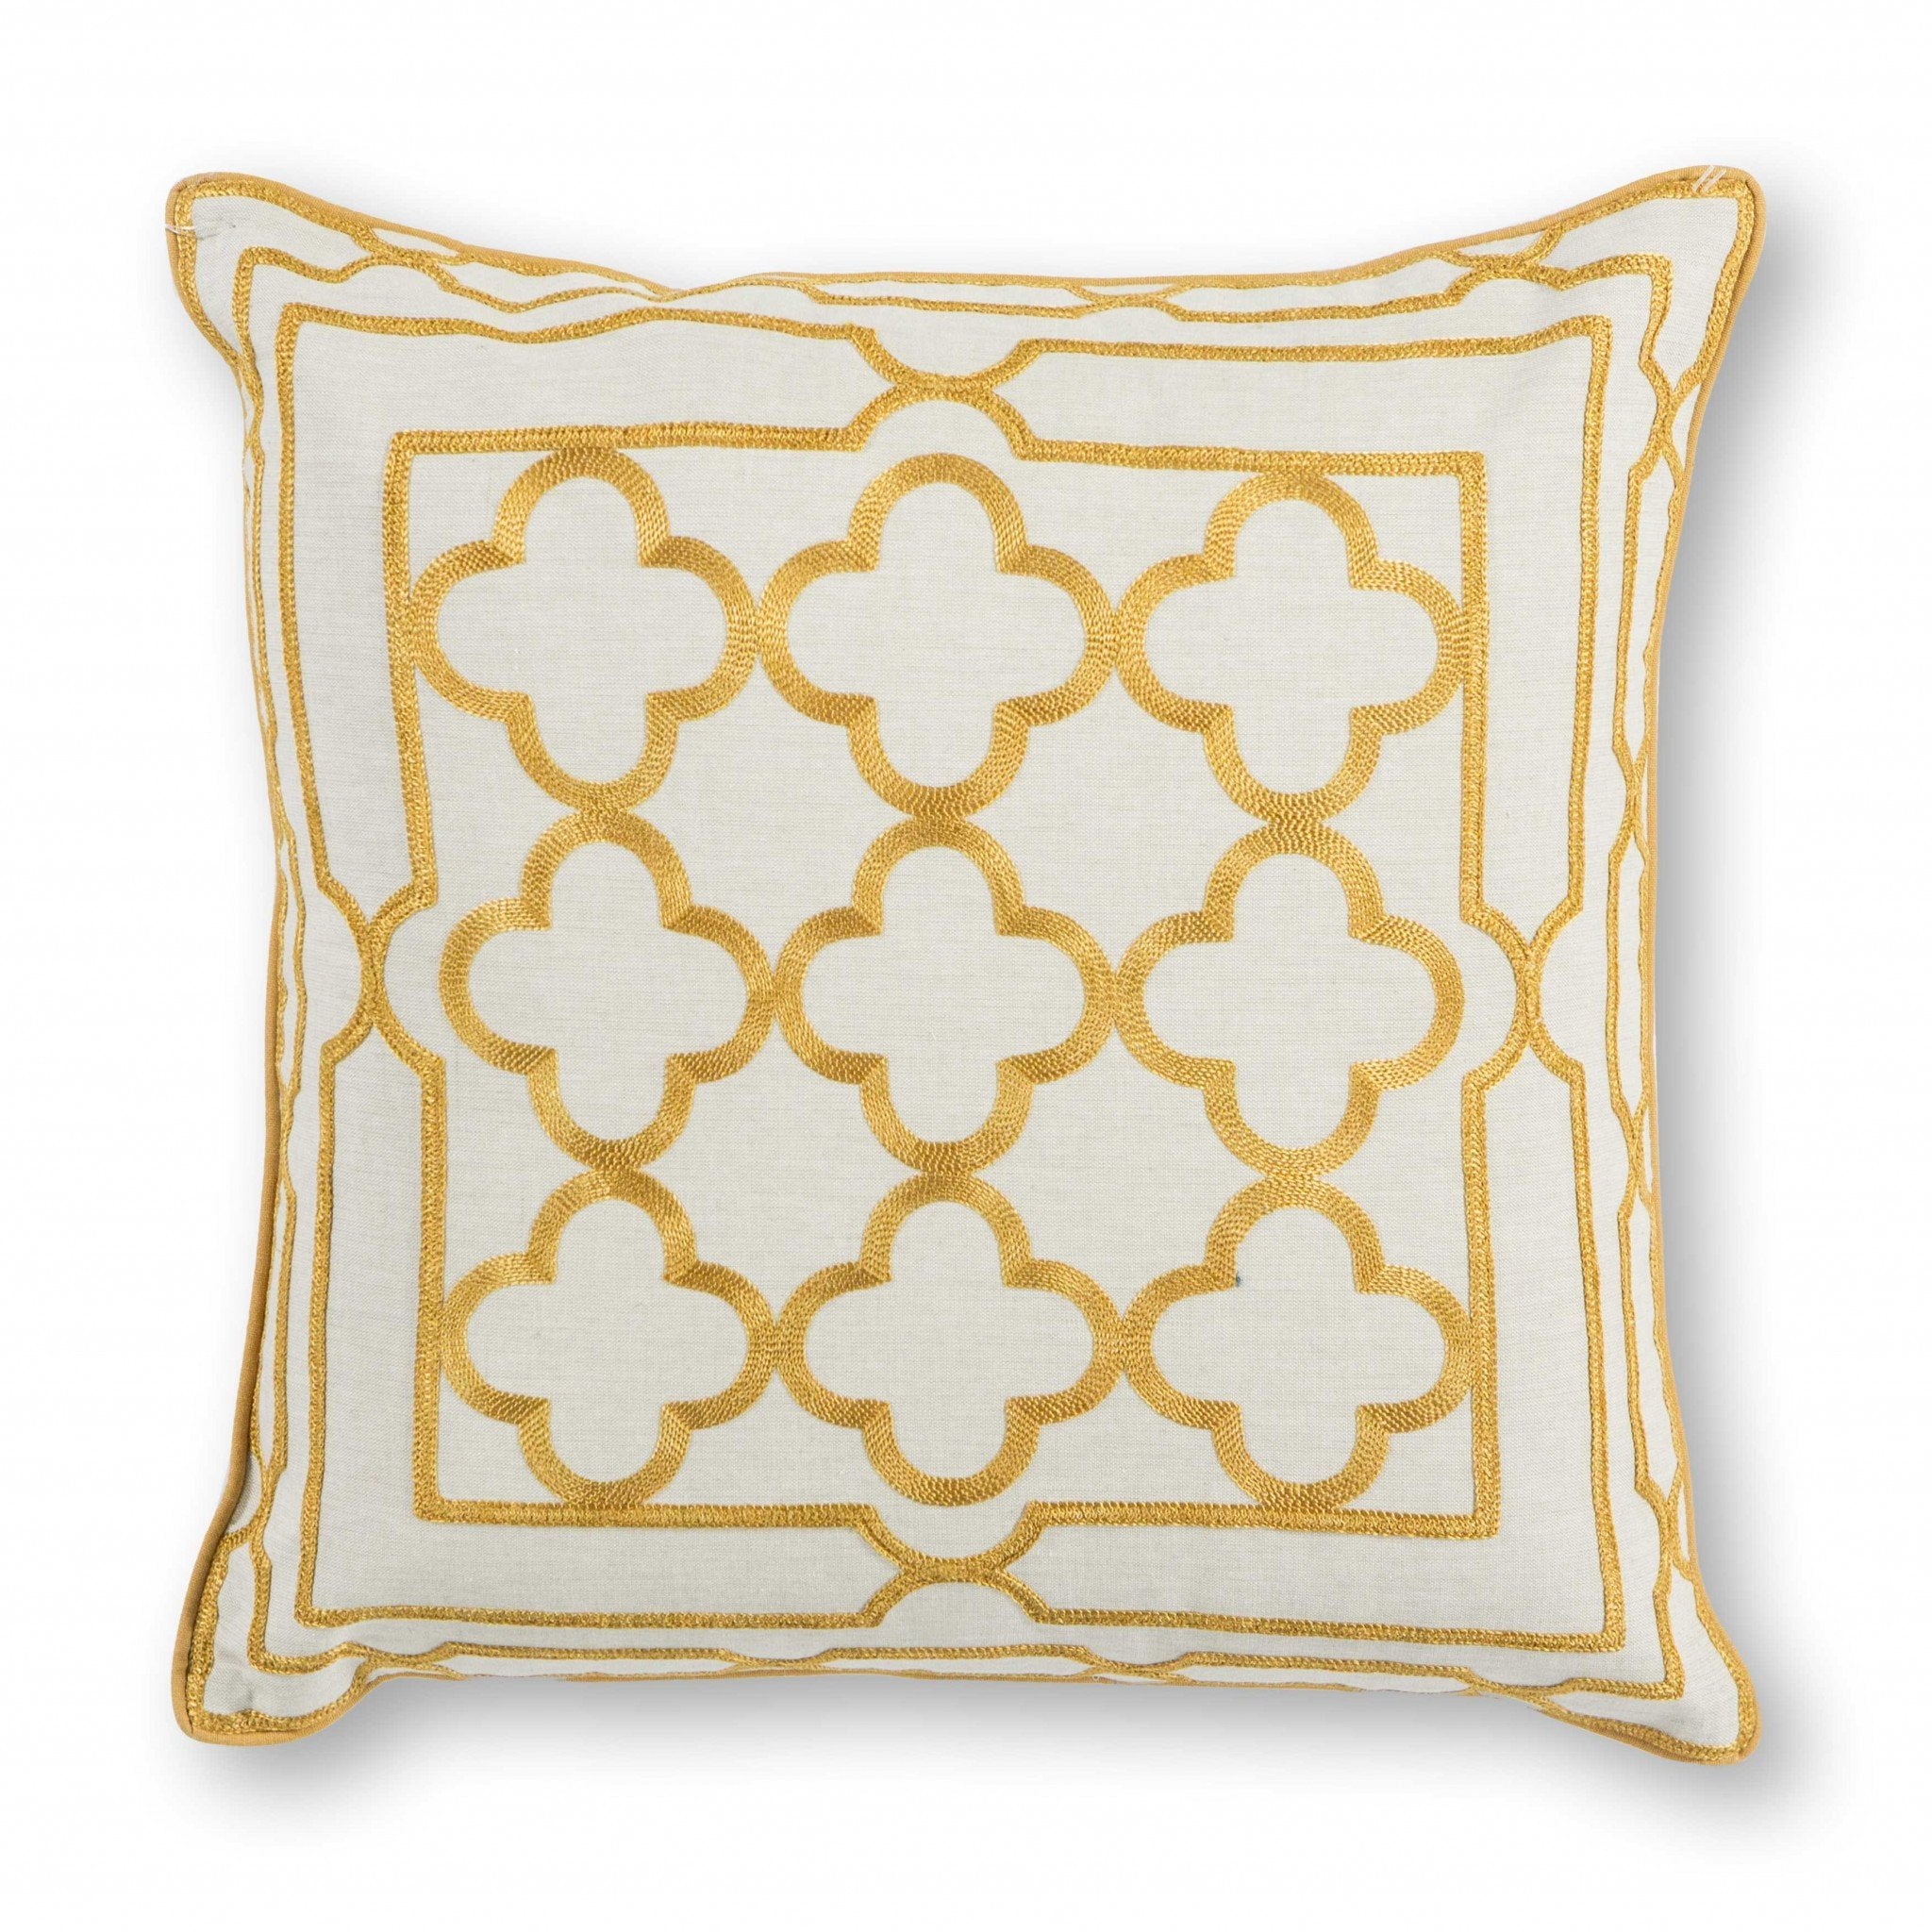 Square White and Gold Quatrefoil Accent Pillow